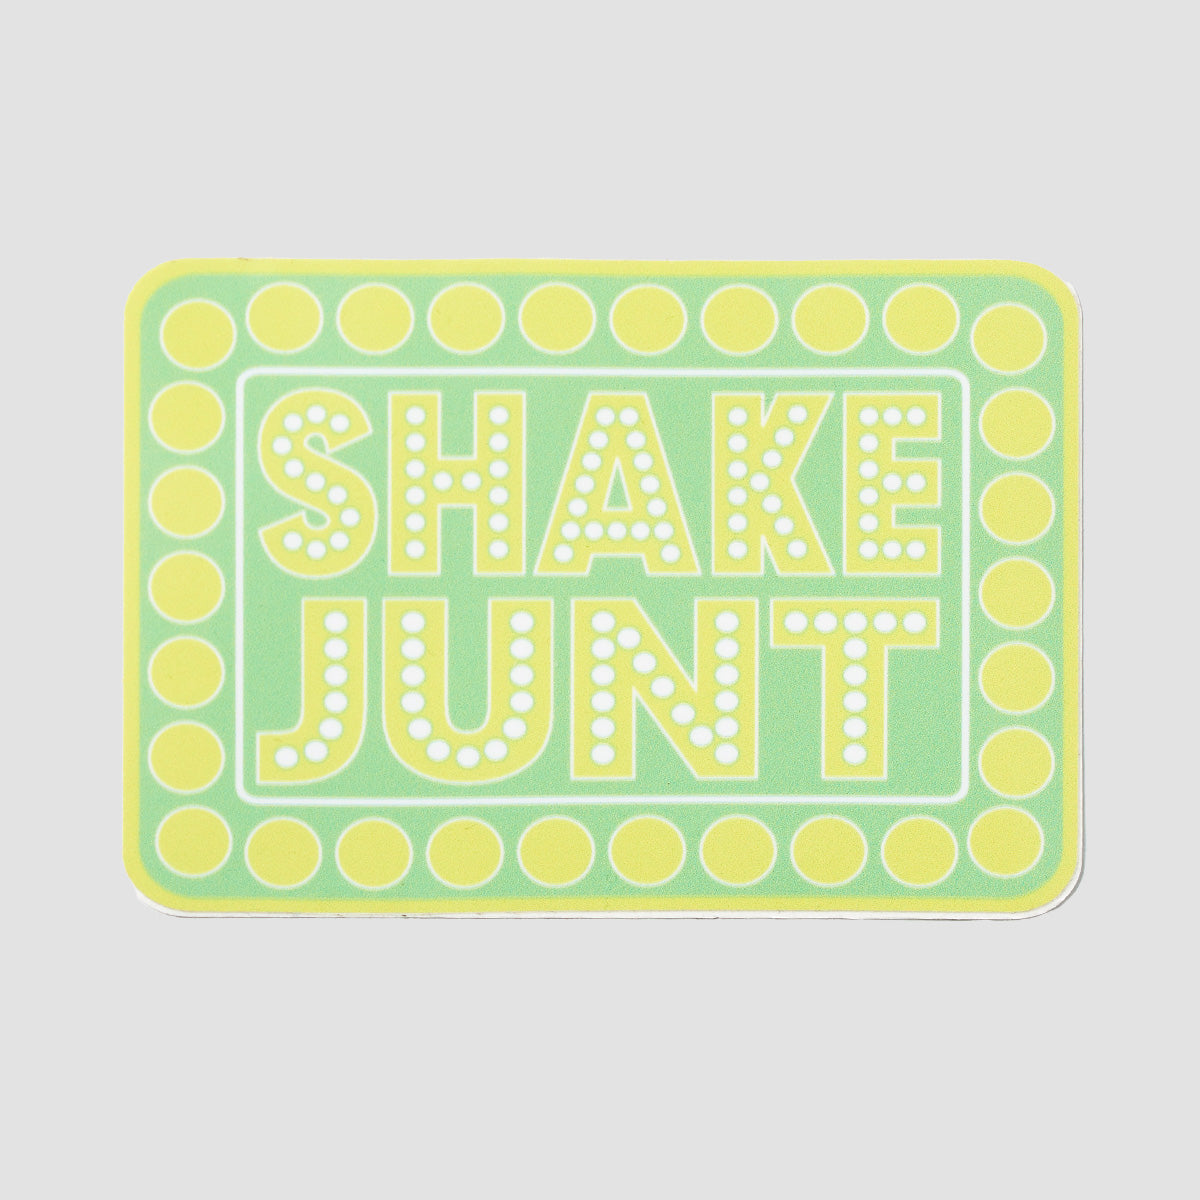 Shake Junt Box Logo Sticker Green/Yellow 100x70mm